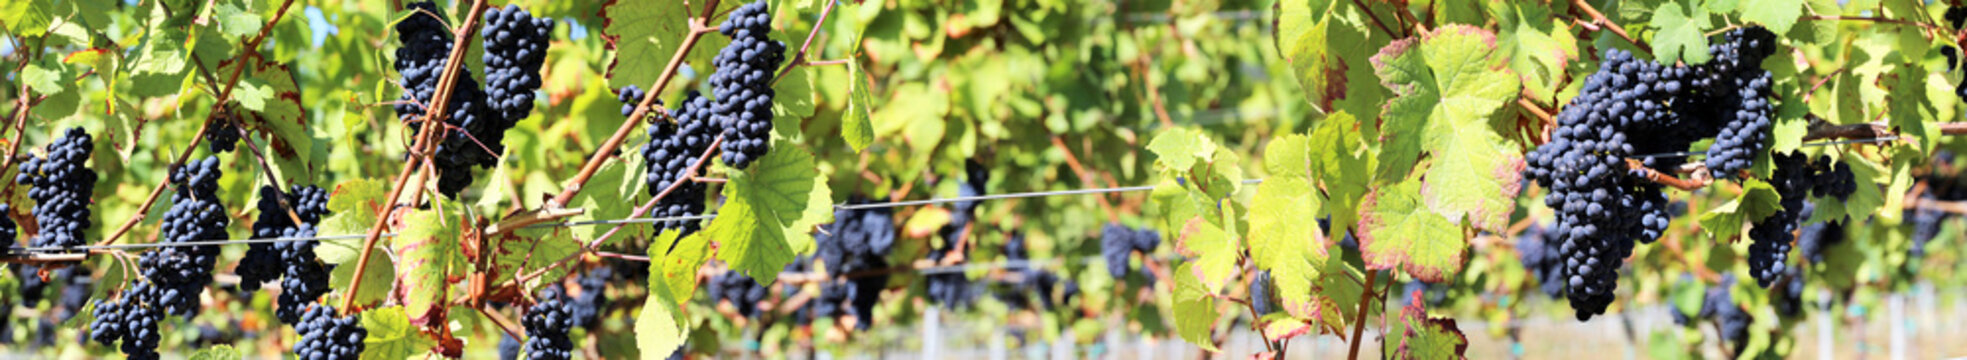 Blue grapes on vine panoramic image